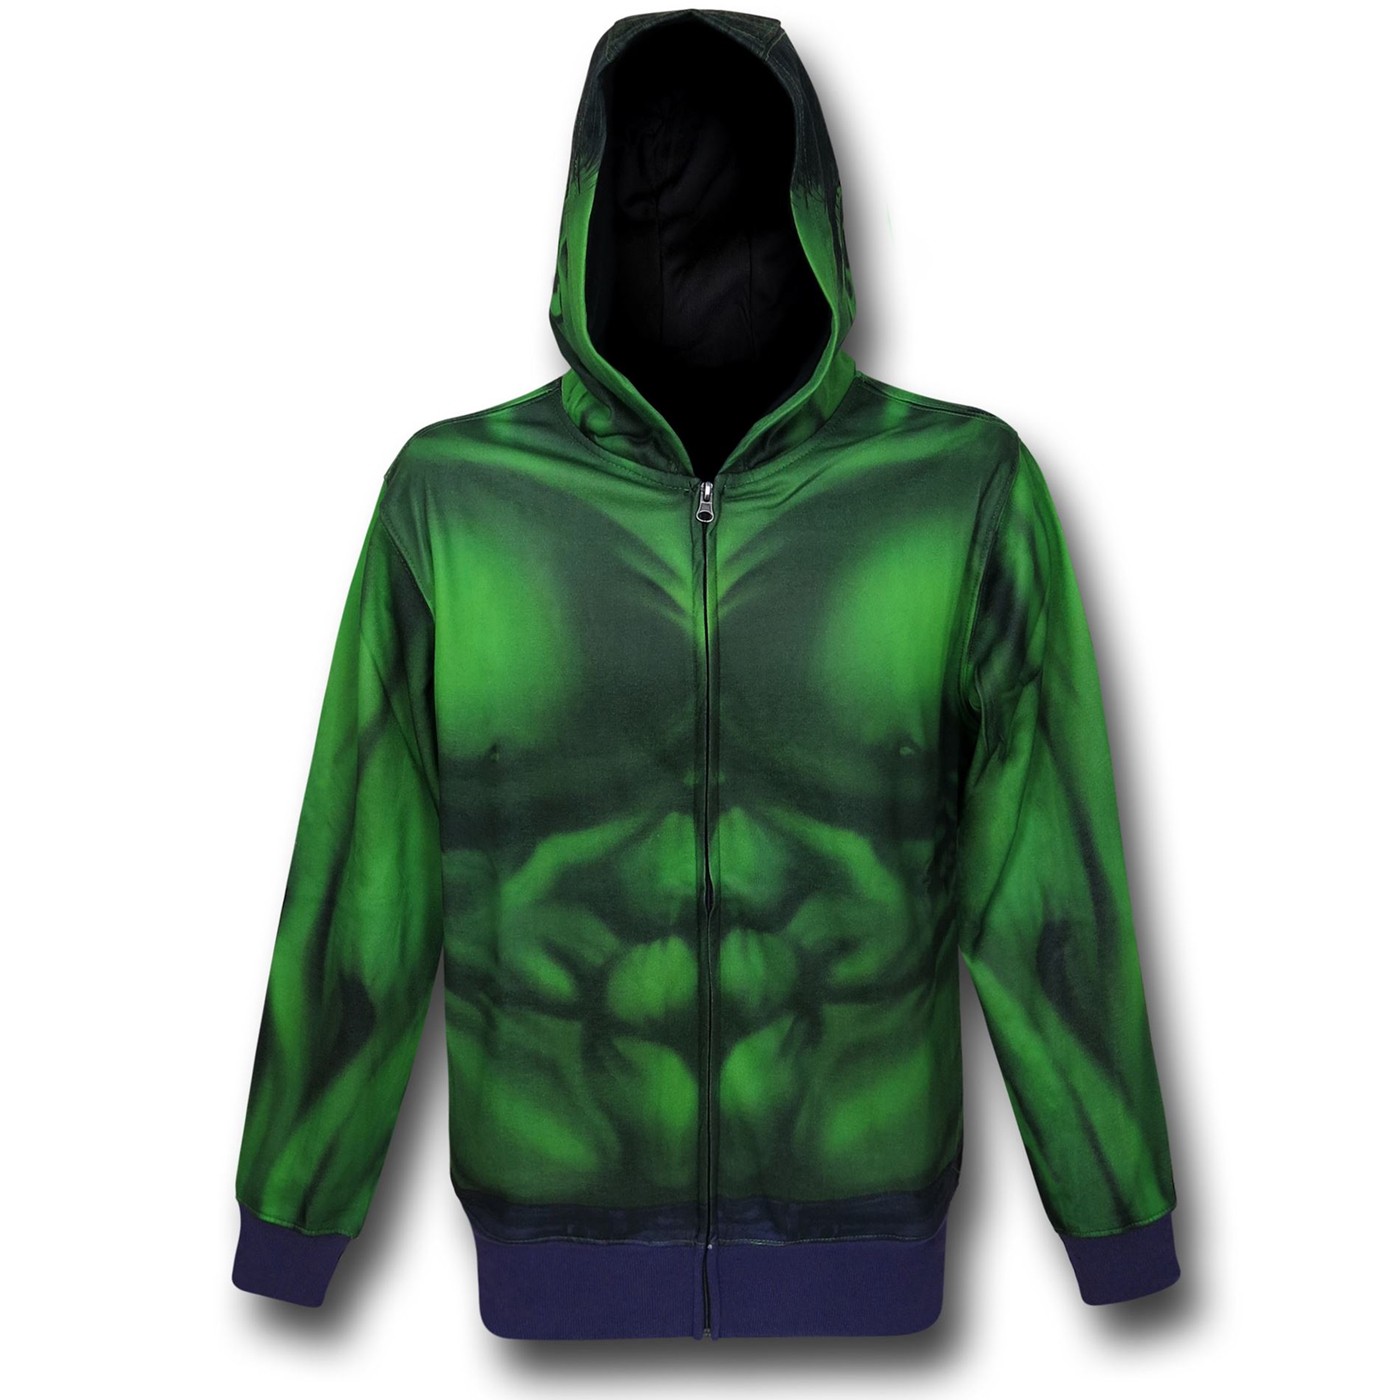 Hulk Lightweight Sublimated Costume Zip-Up Hoodie